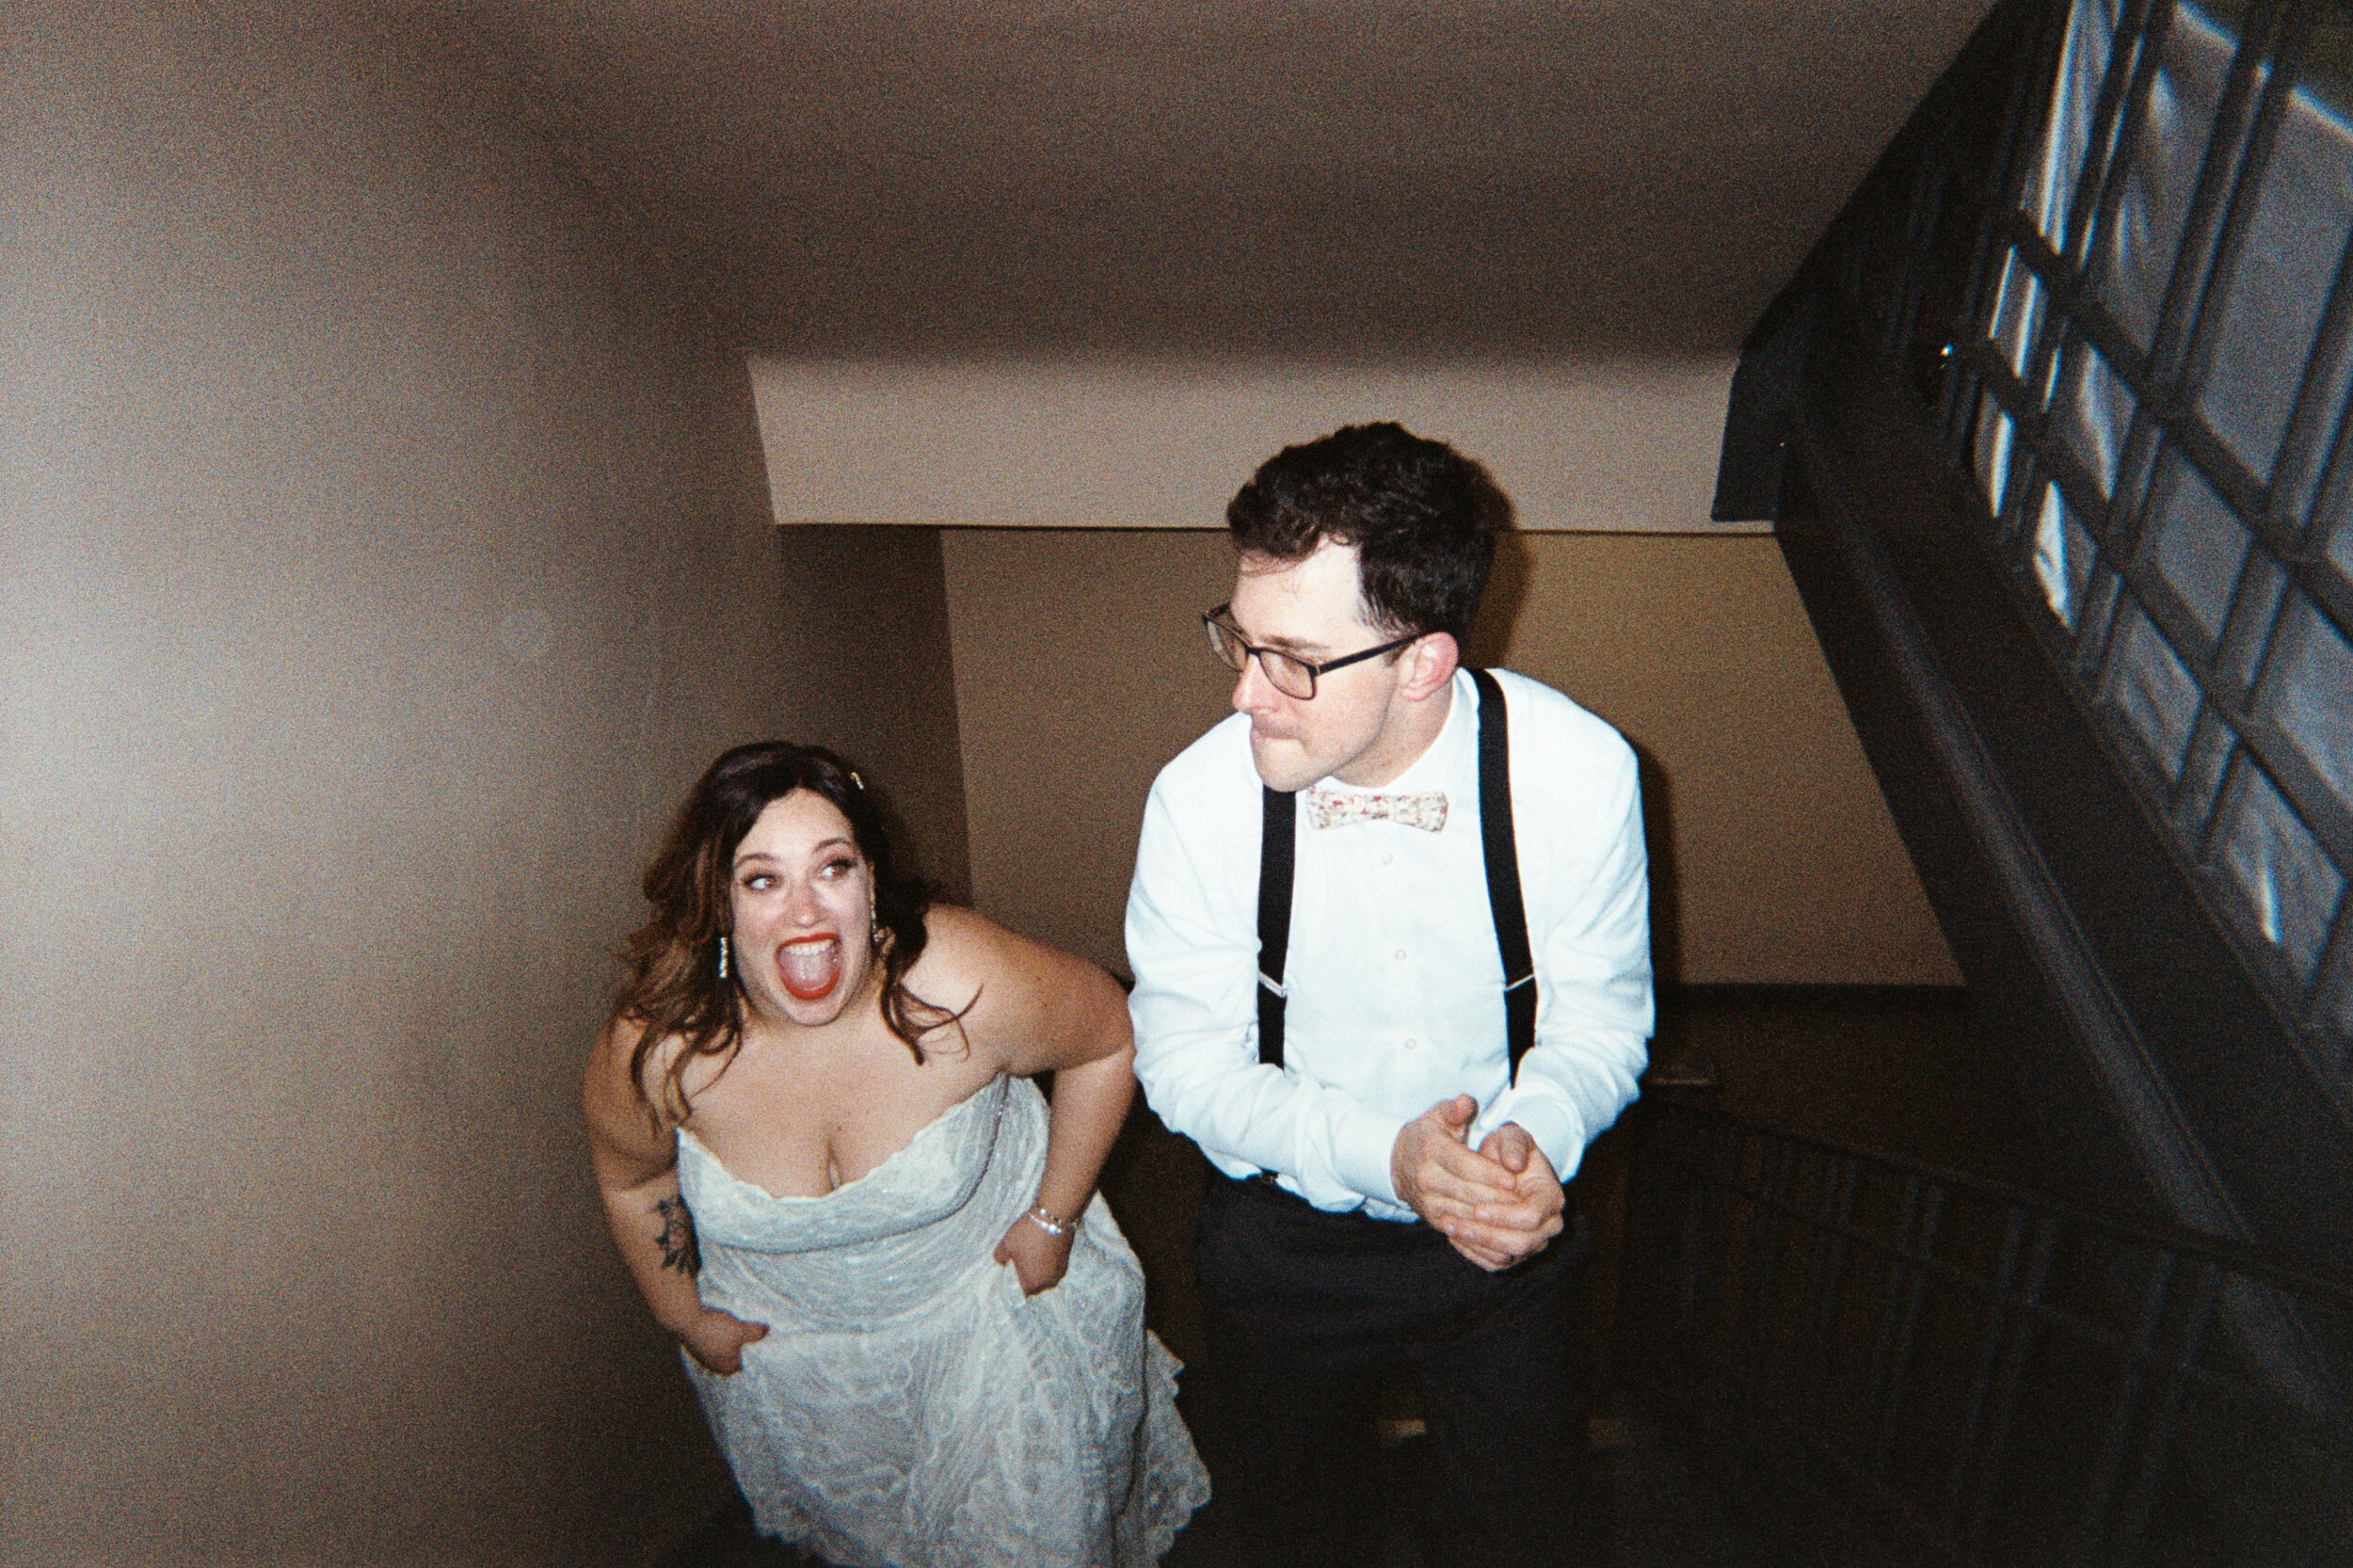 Pittsburgh NYC Film Wedding Photographer - Rat Lab - Lawrenceville - Stephanie Dave268.jpg